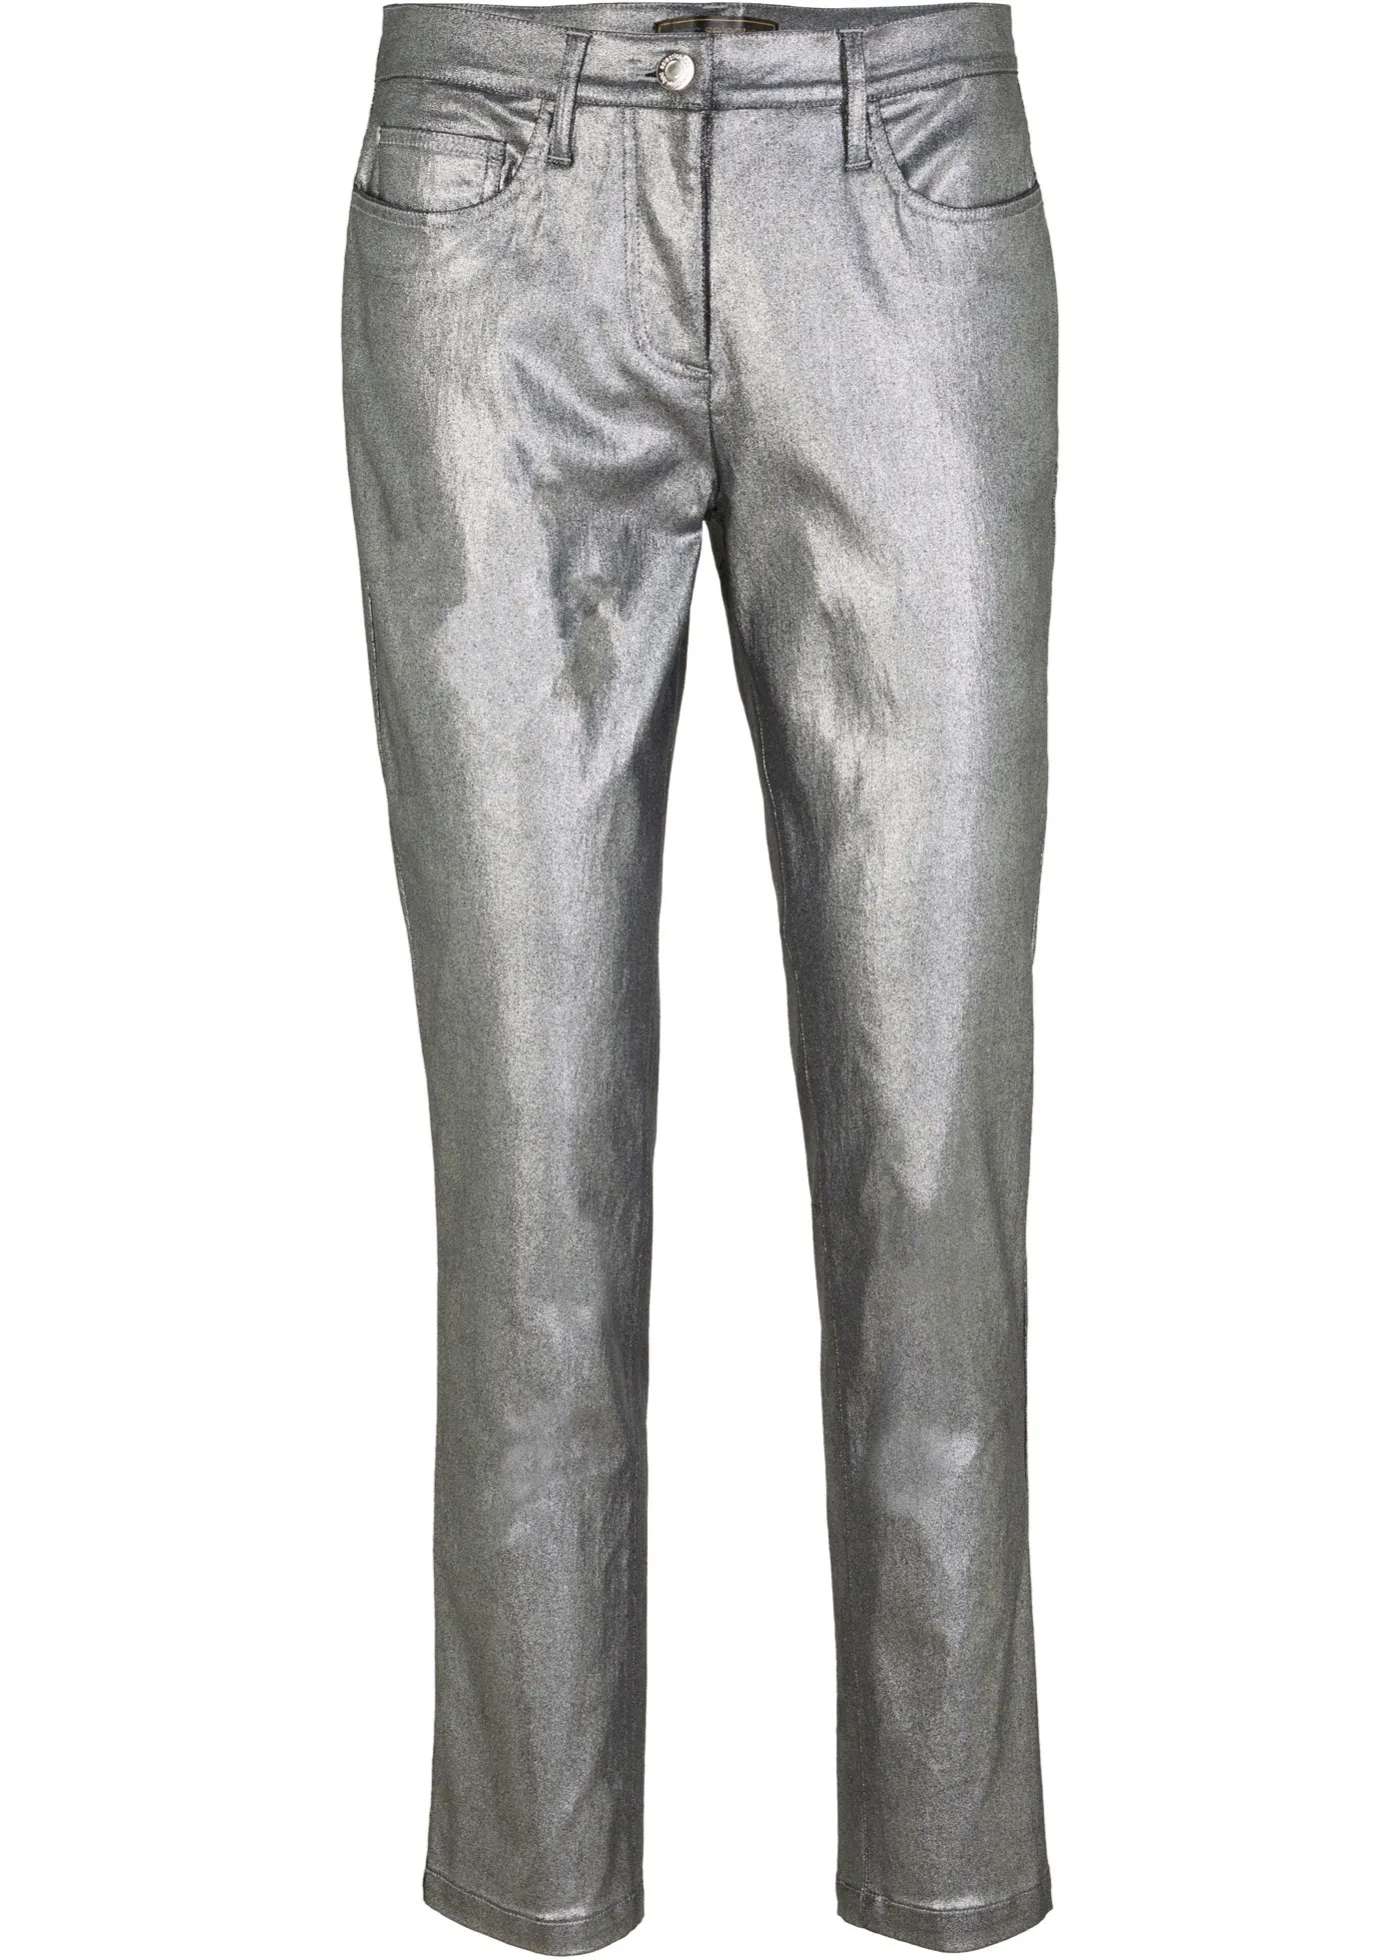 Pantaloni elasticizzati lucidi (Argento) - bpc selection